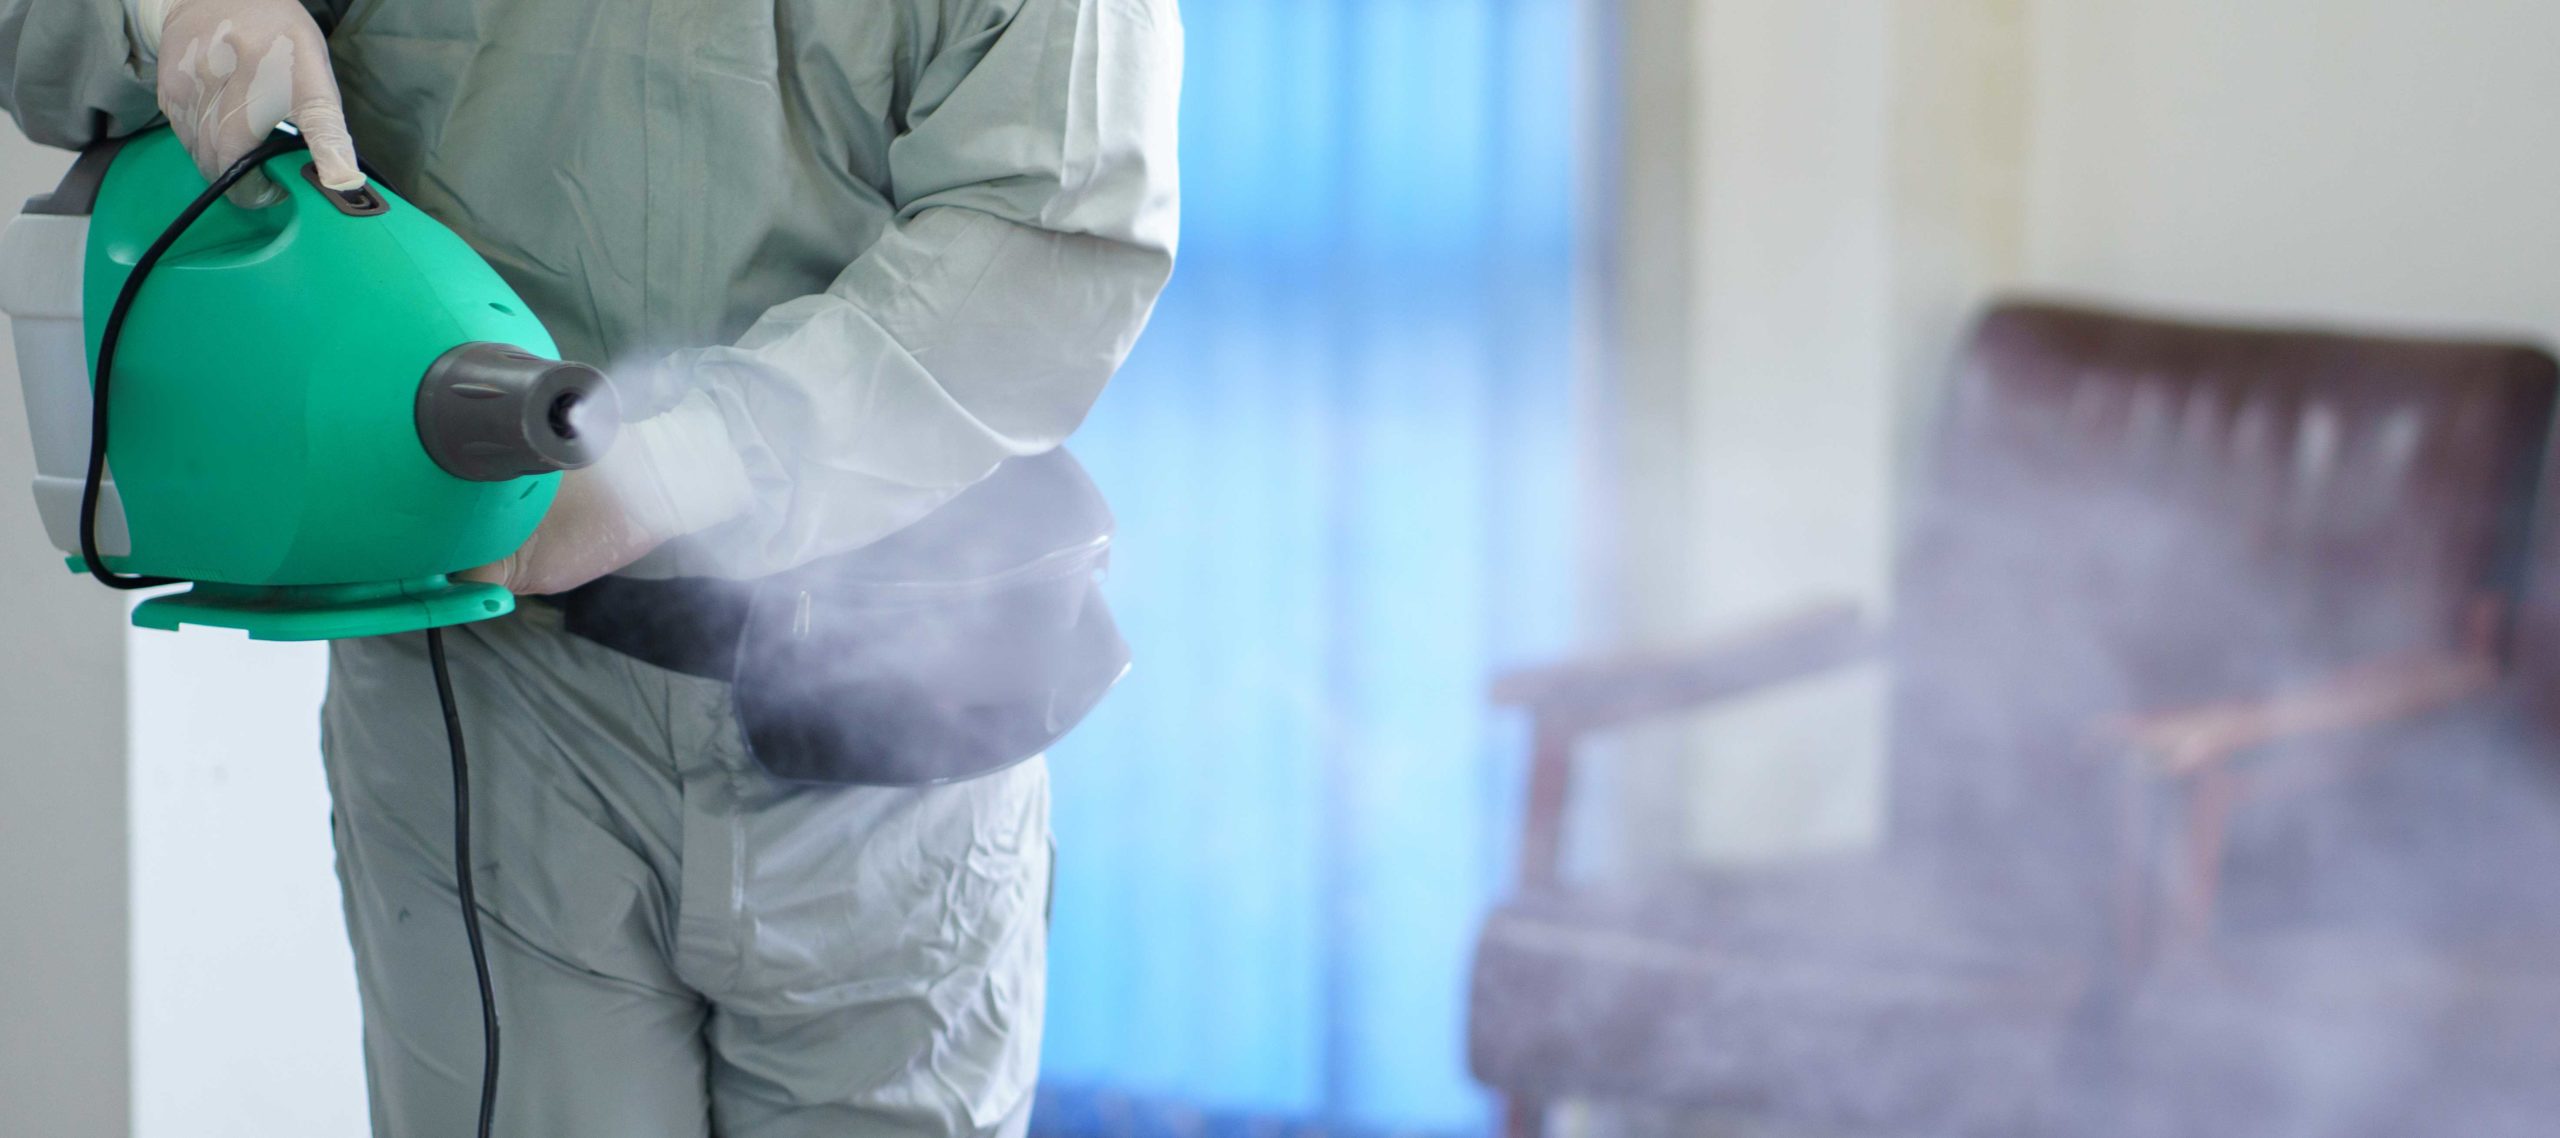 Virus Cleaning - Spraying Electrostatic Disinfectant Springfield Missouri